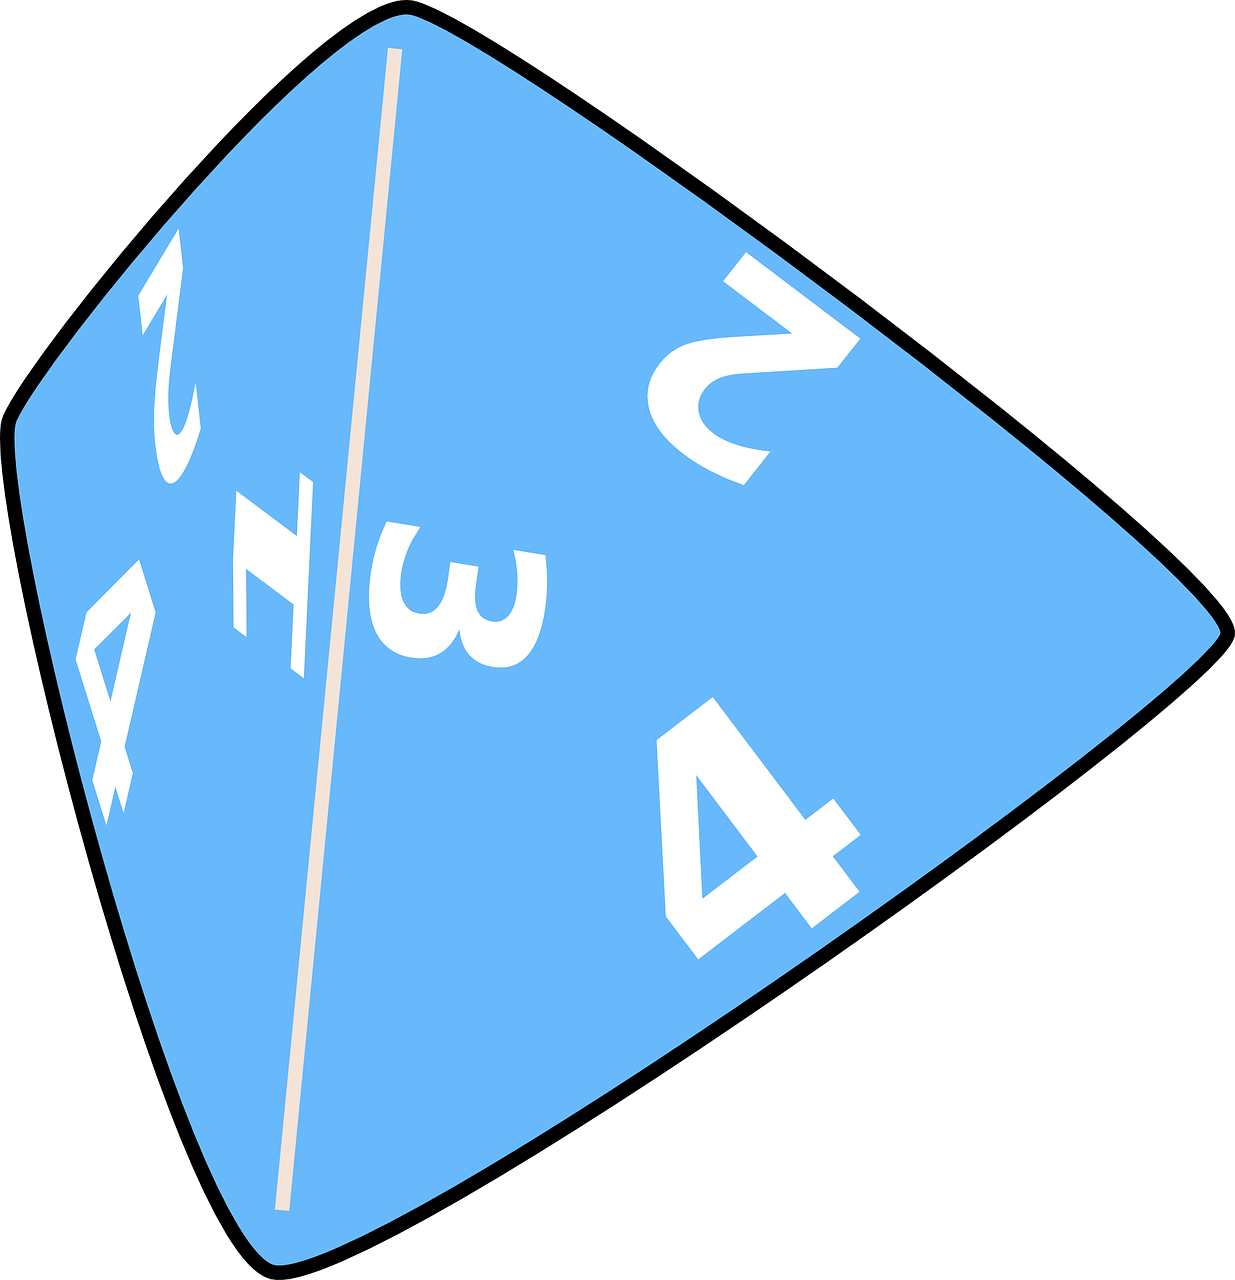 triangle dice shape free photo